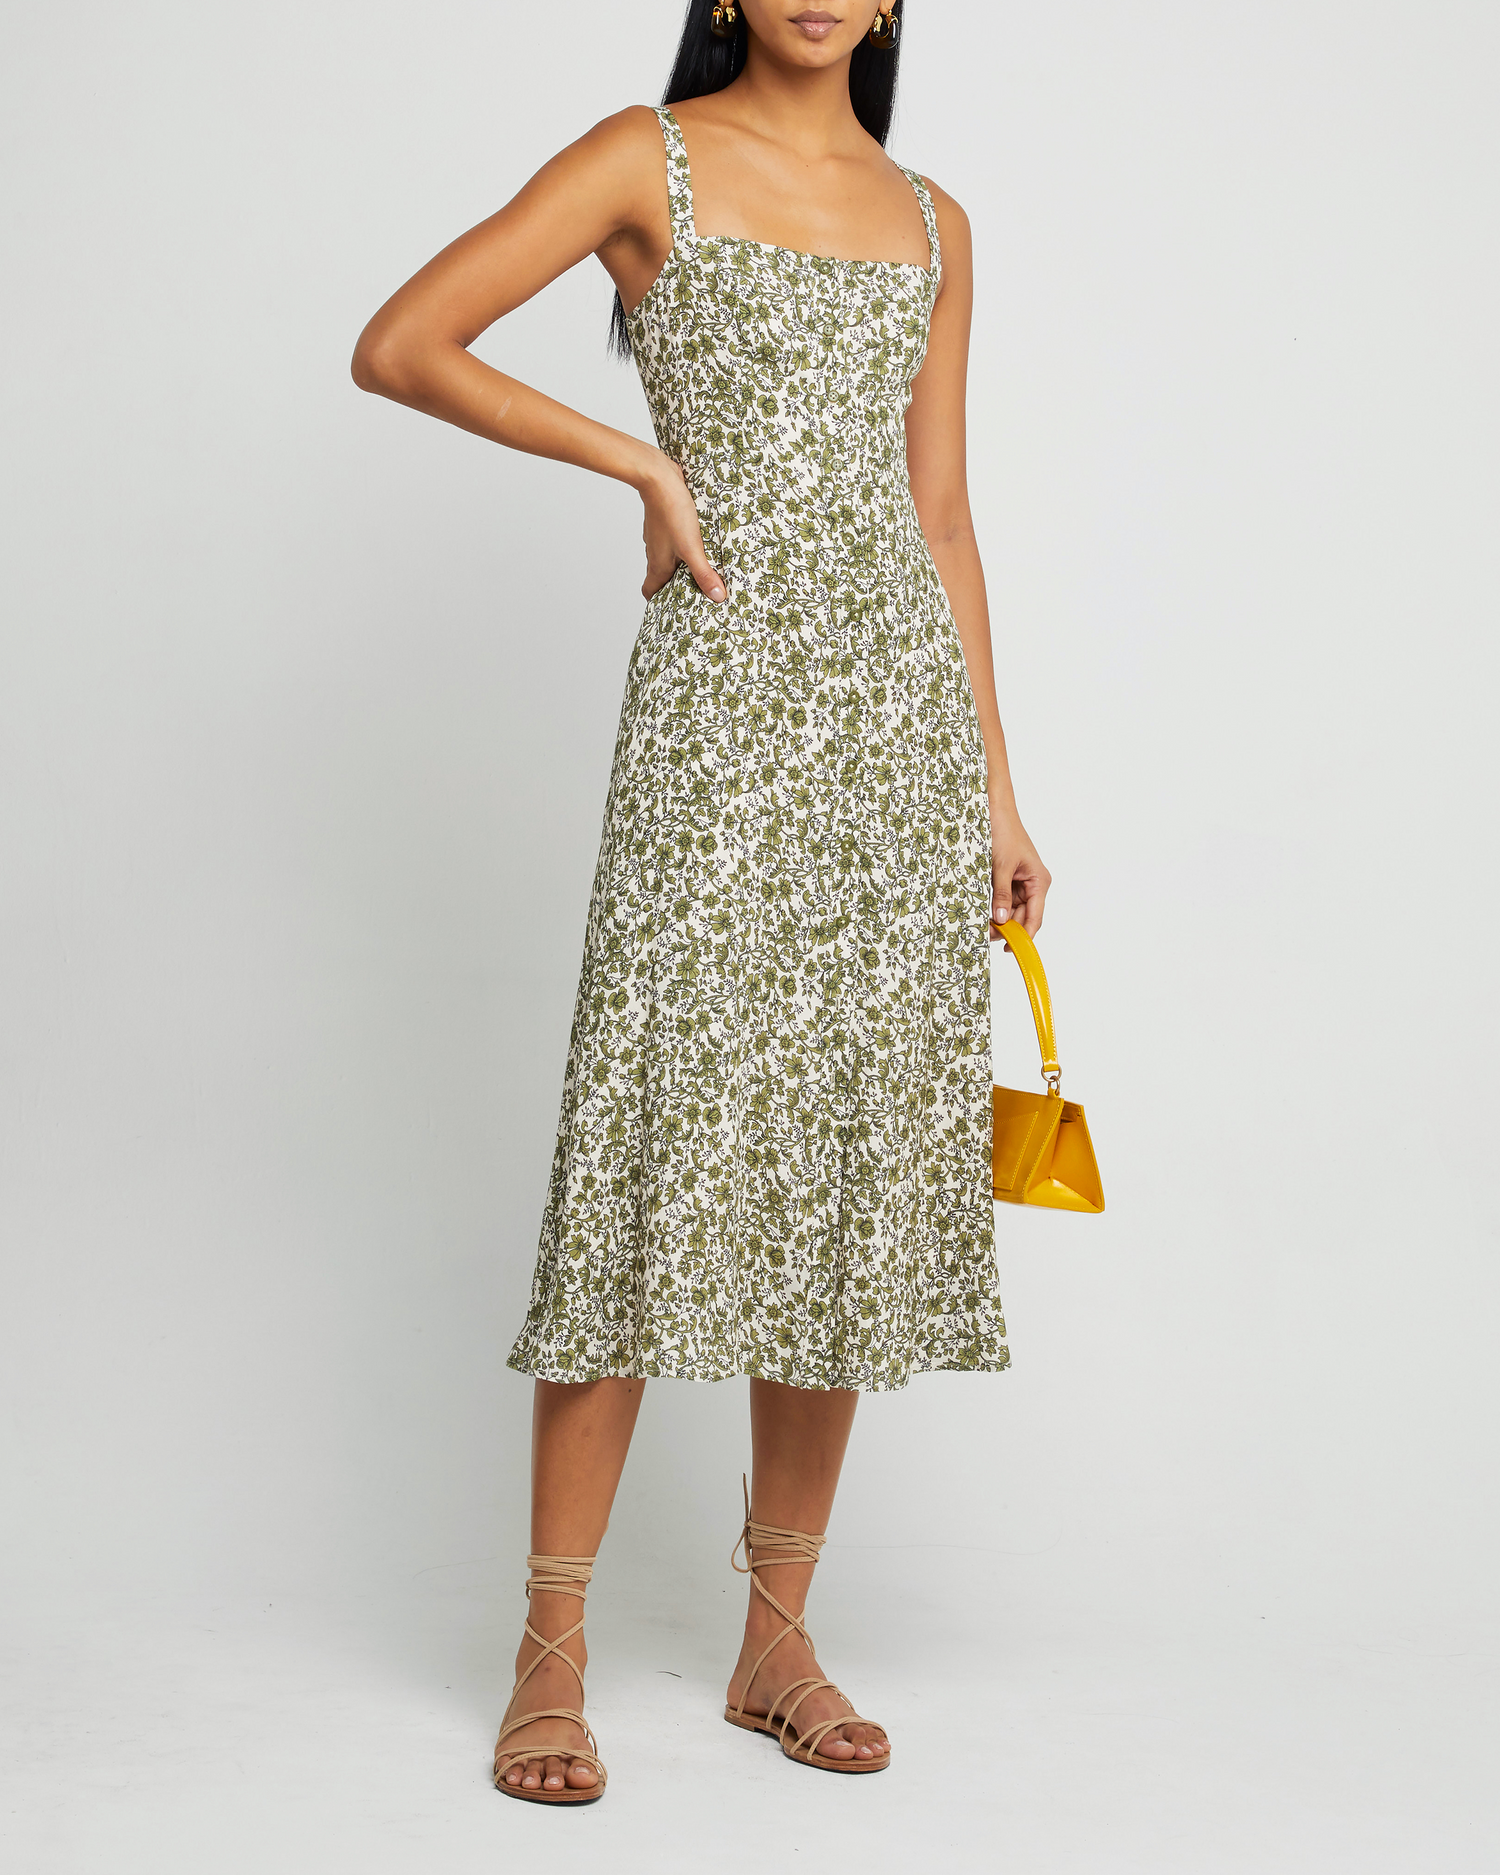 Fifth image of Juliette Dress, a green midi dress, floral, tank, slip, spaghetti strap